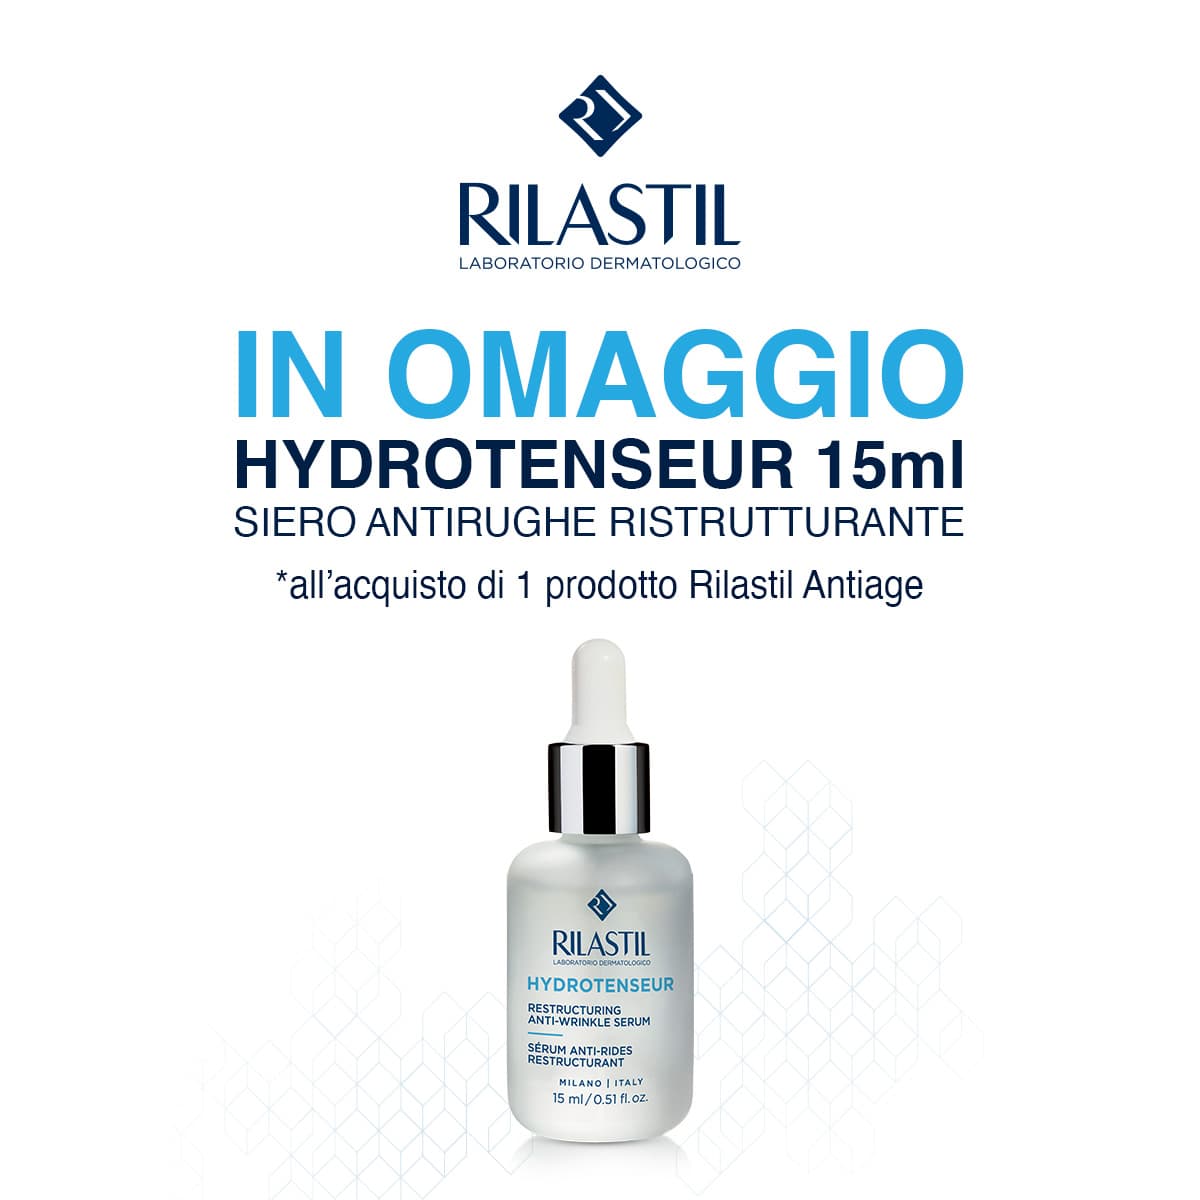 Rilastil antirughe promo hydrotenseur 15ml omaggio mobile